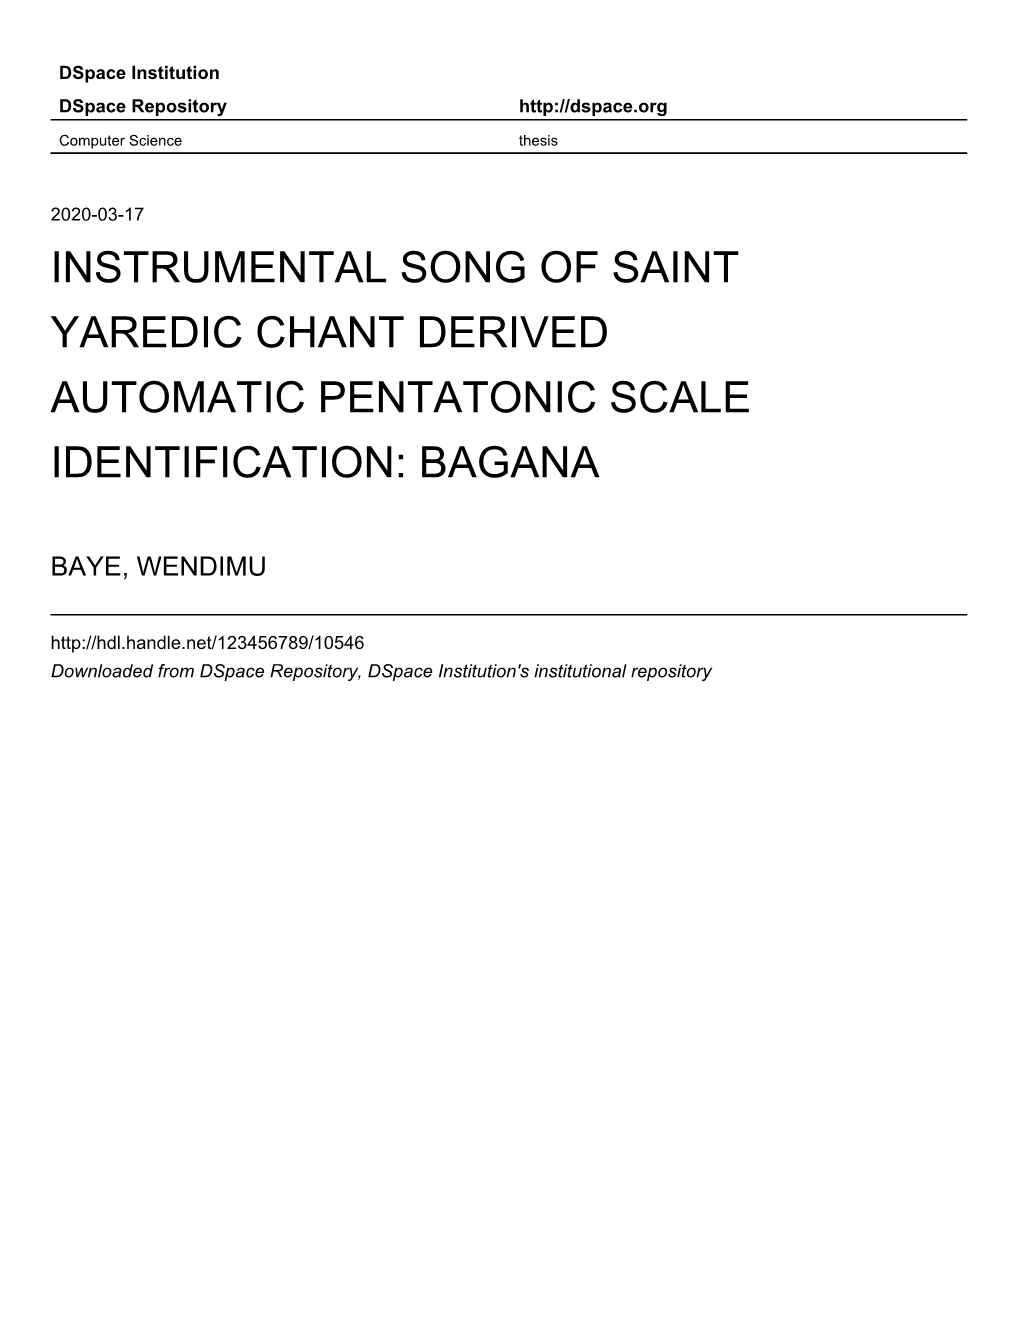 Instrumental Song of Saint Yaredic Chant Derived Automatic Pentatonic Scale Identification: Bagana